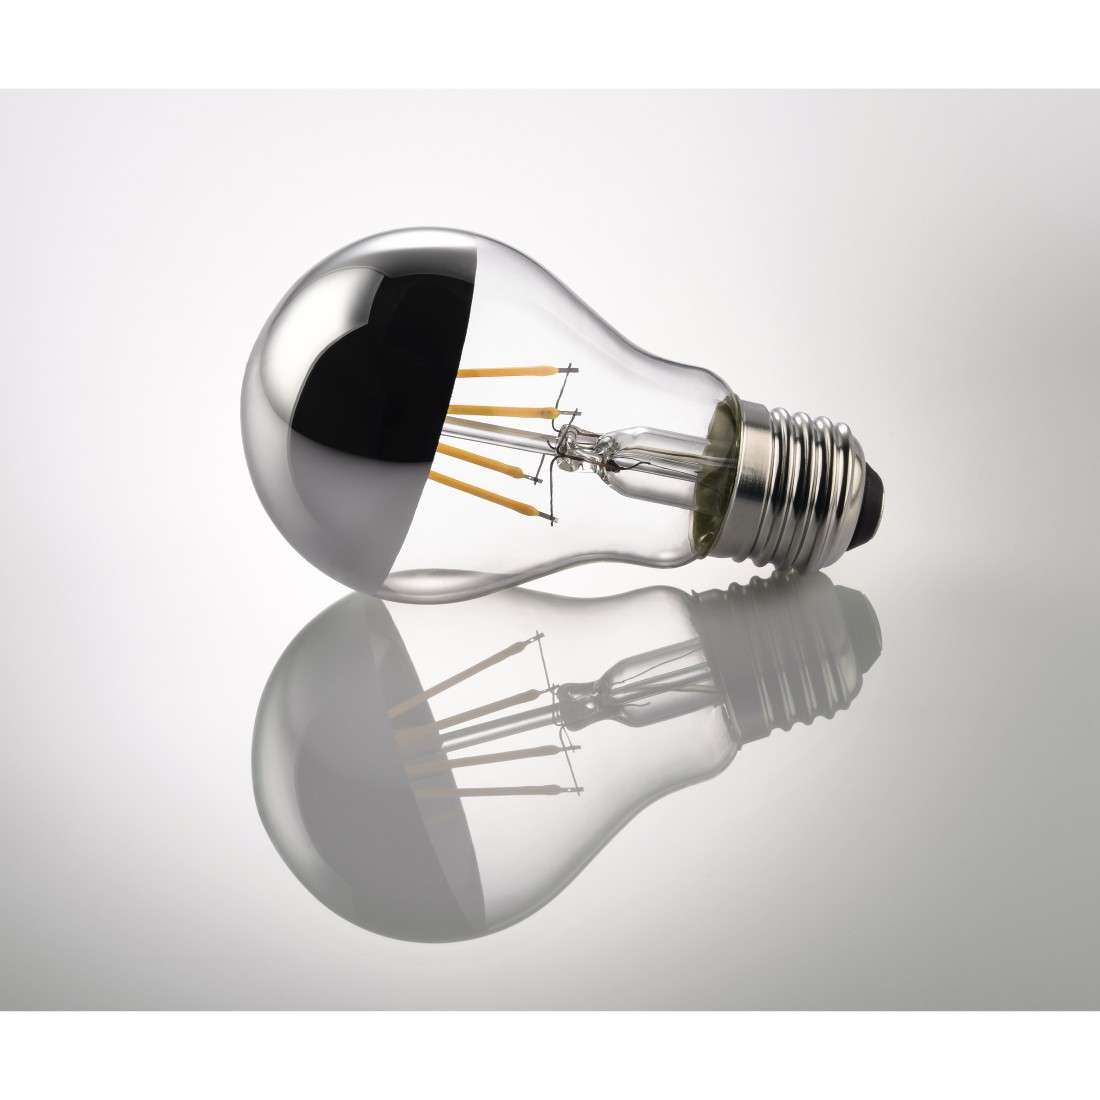 LED-Filament, E27, 400lm ersetzt 35W, Glühlampe, Warmweiß